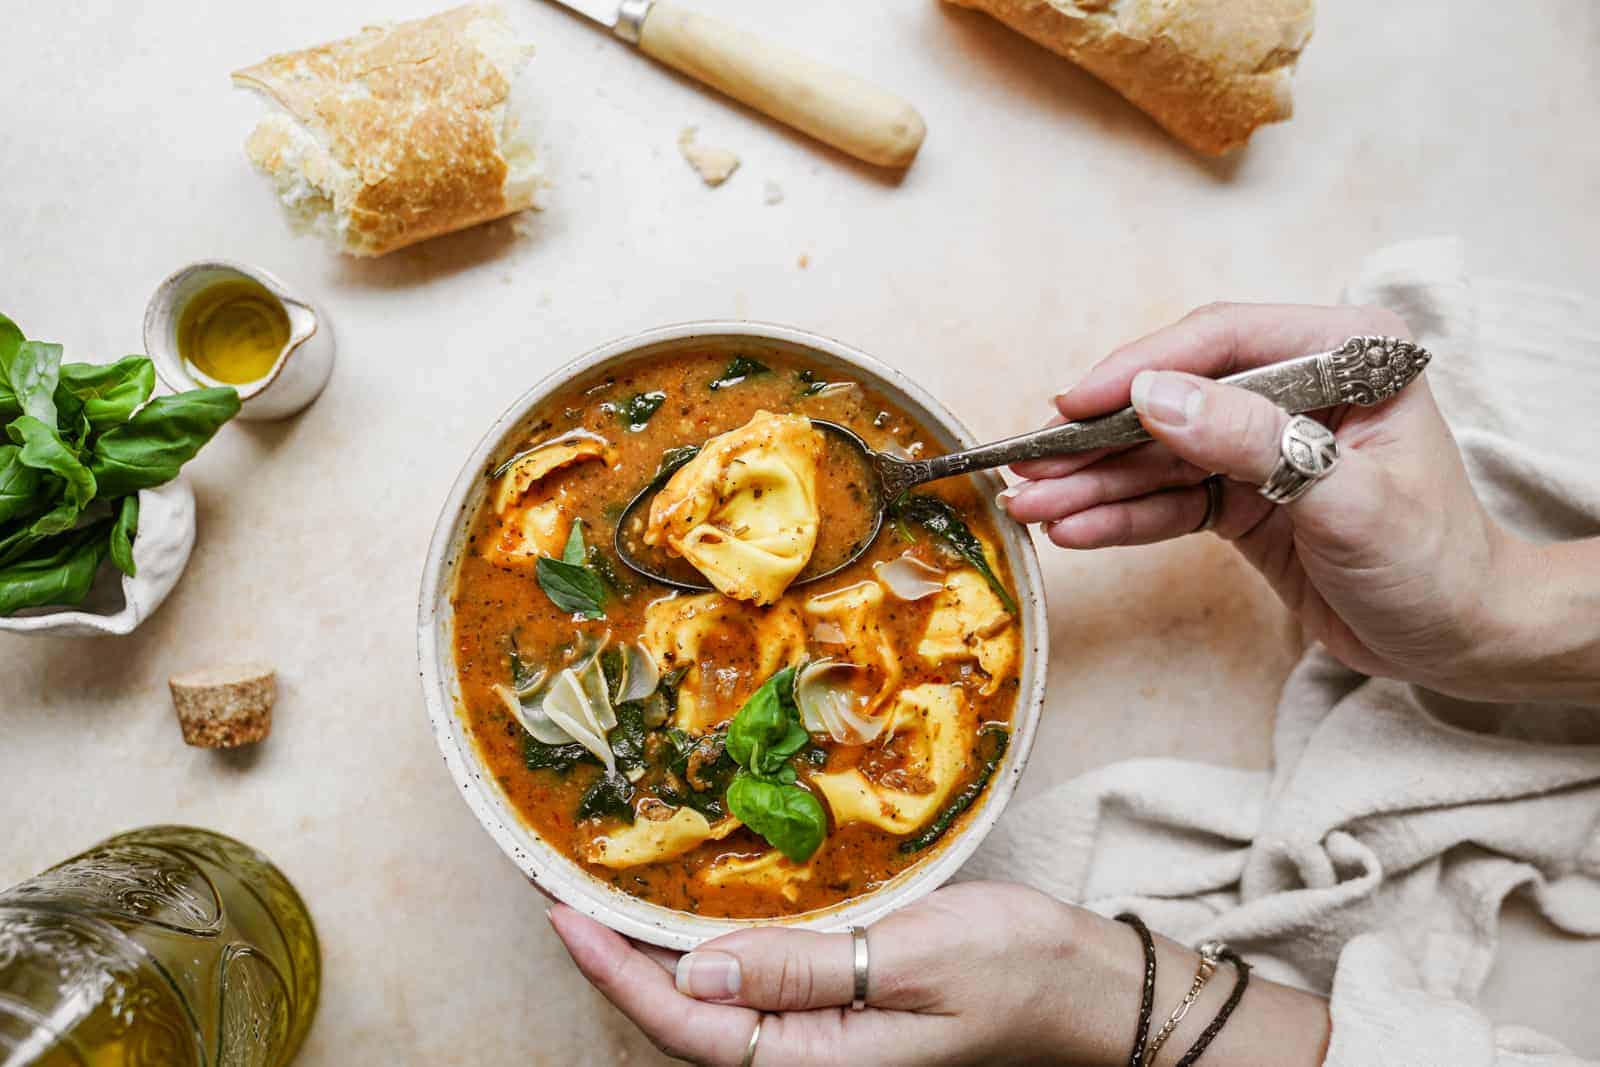 Hand stirring vegan tortellini soup with spoon